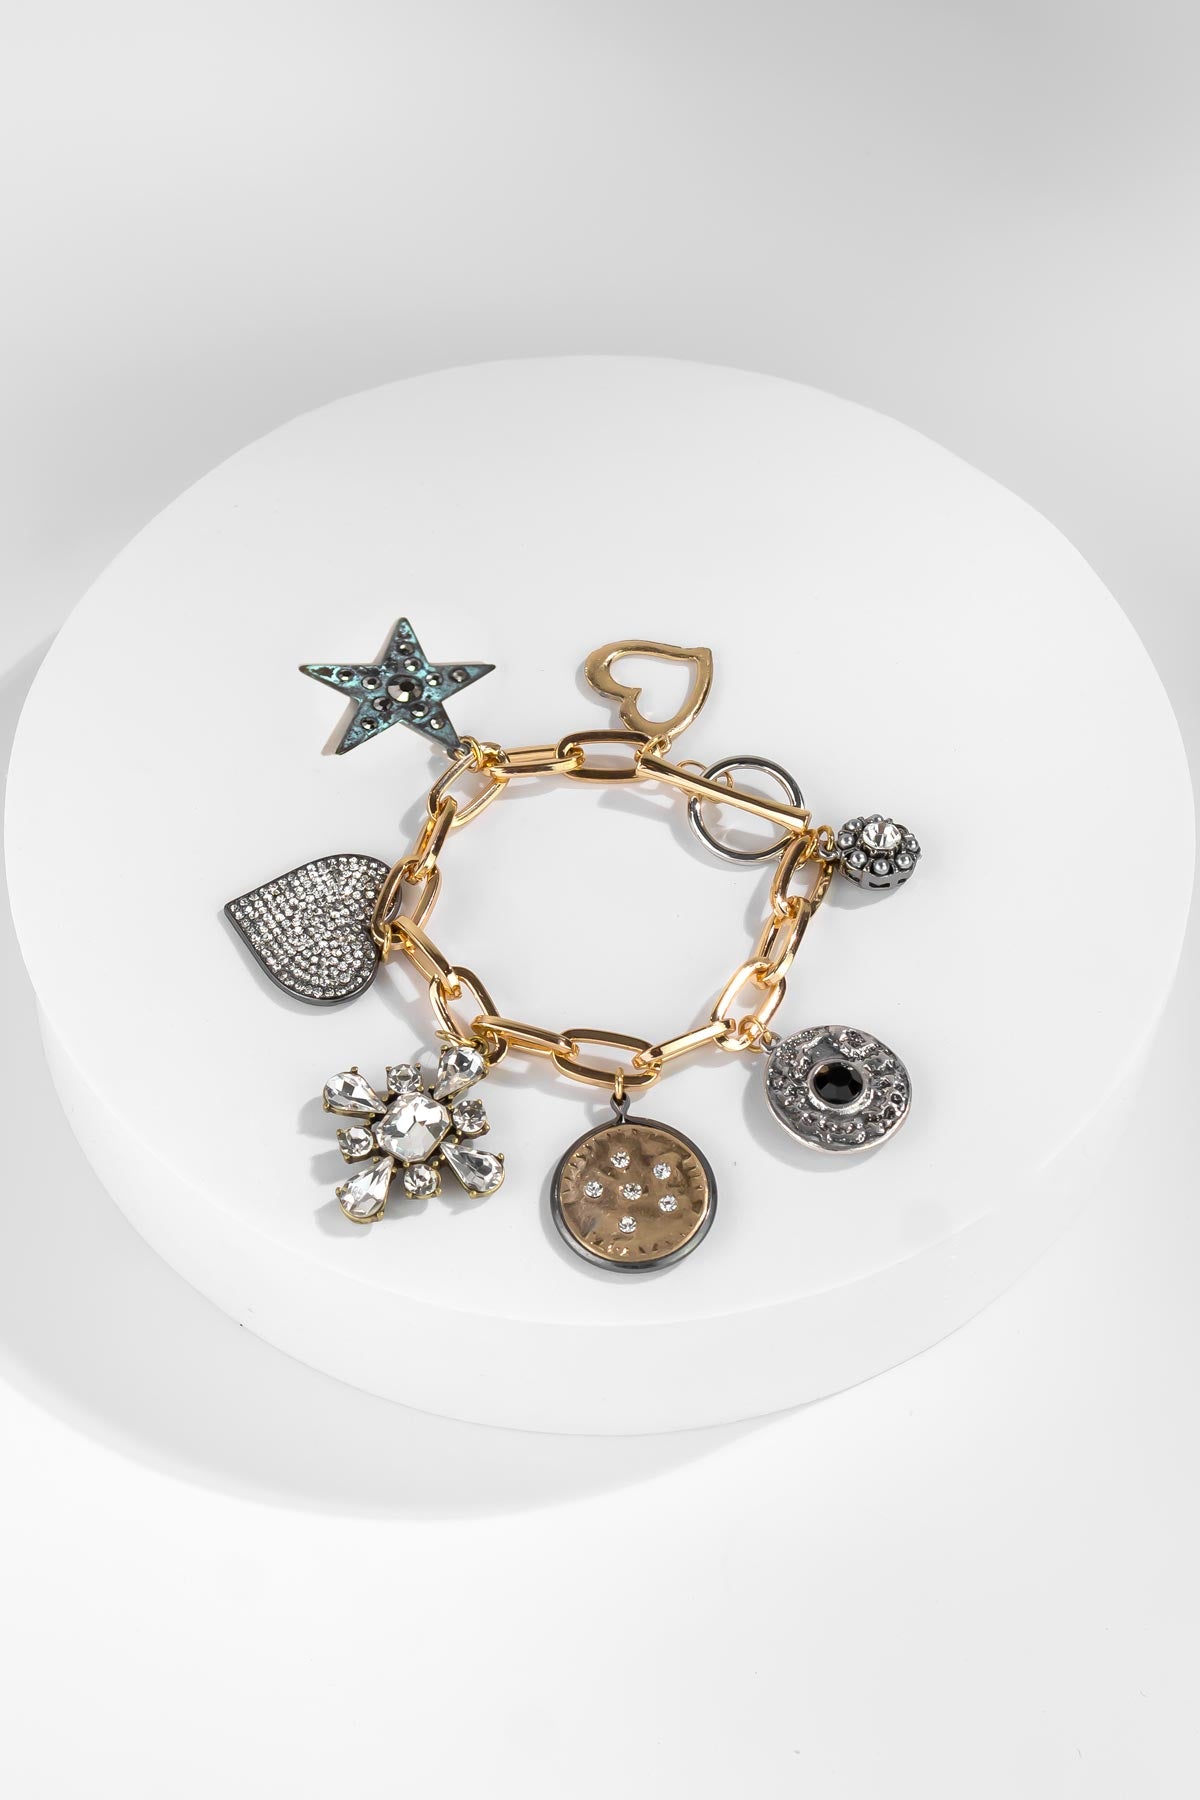 Dauplaise Jewelry - Upcycled Charm Bracelet